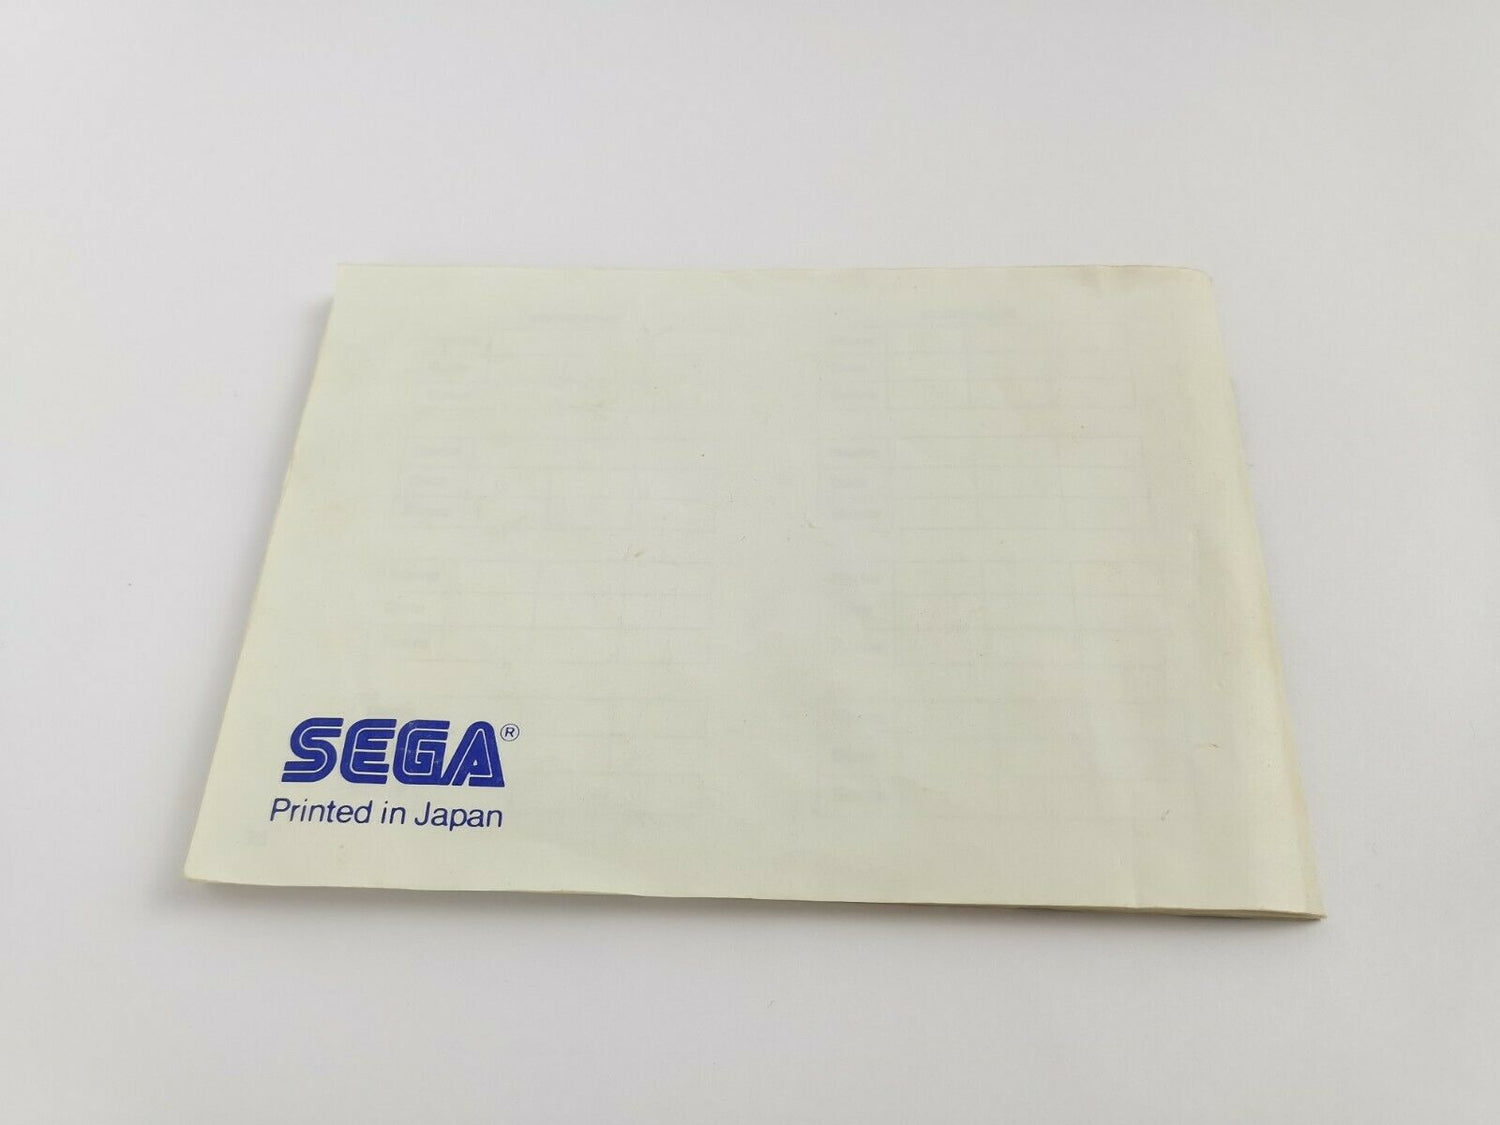 Sega Master System game 